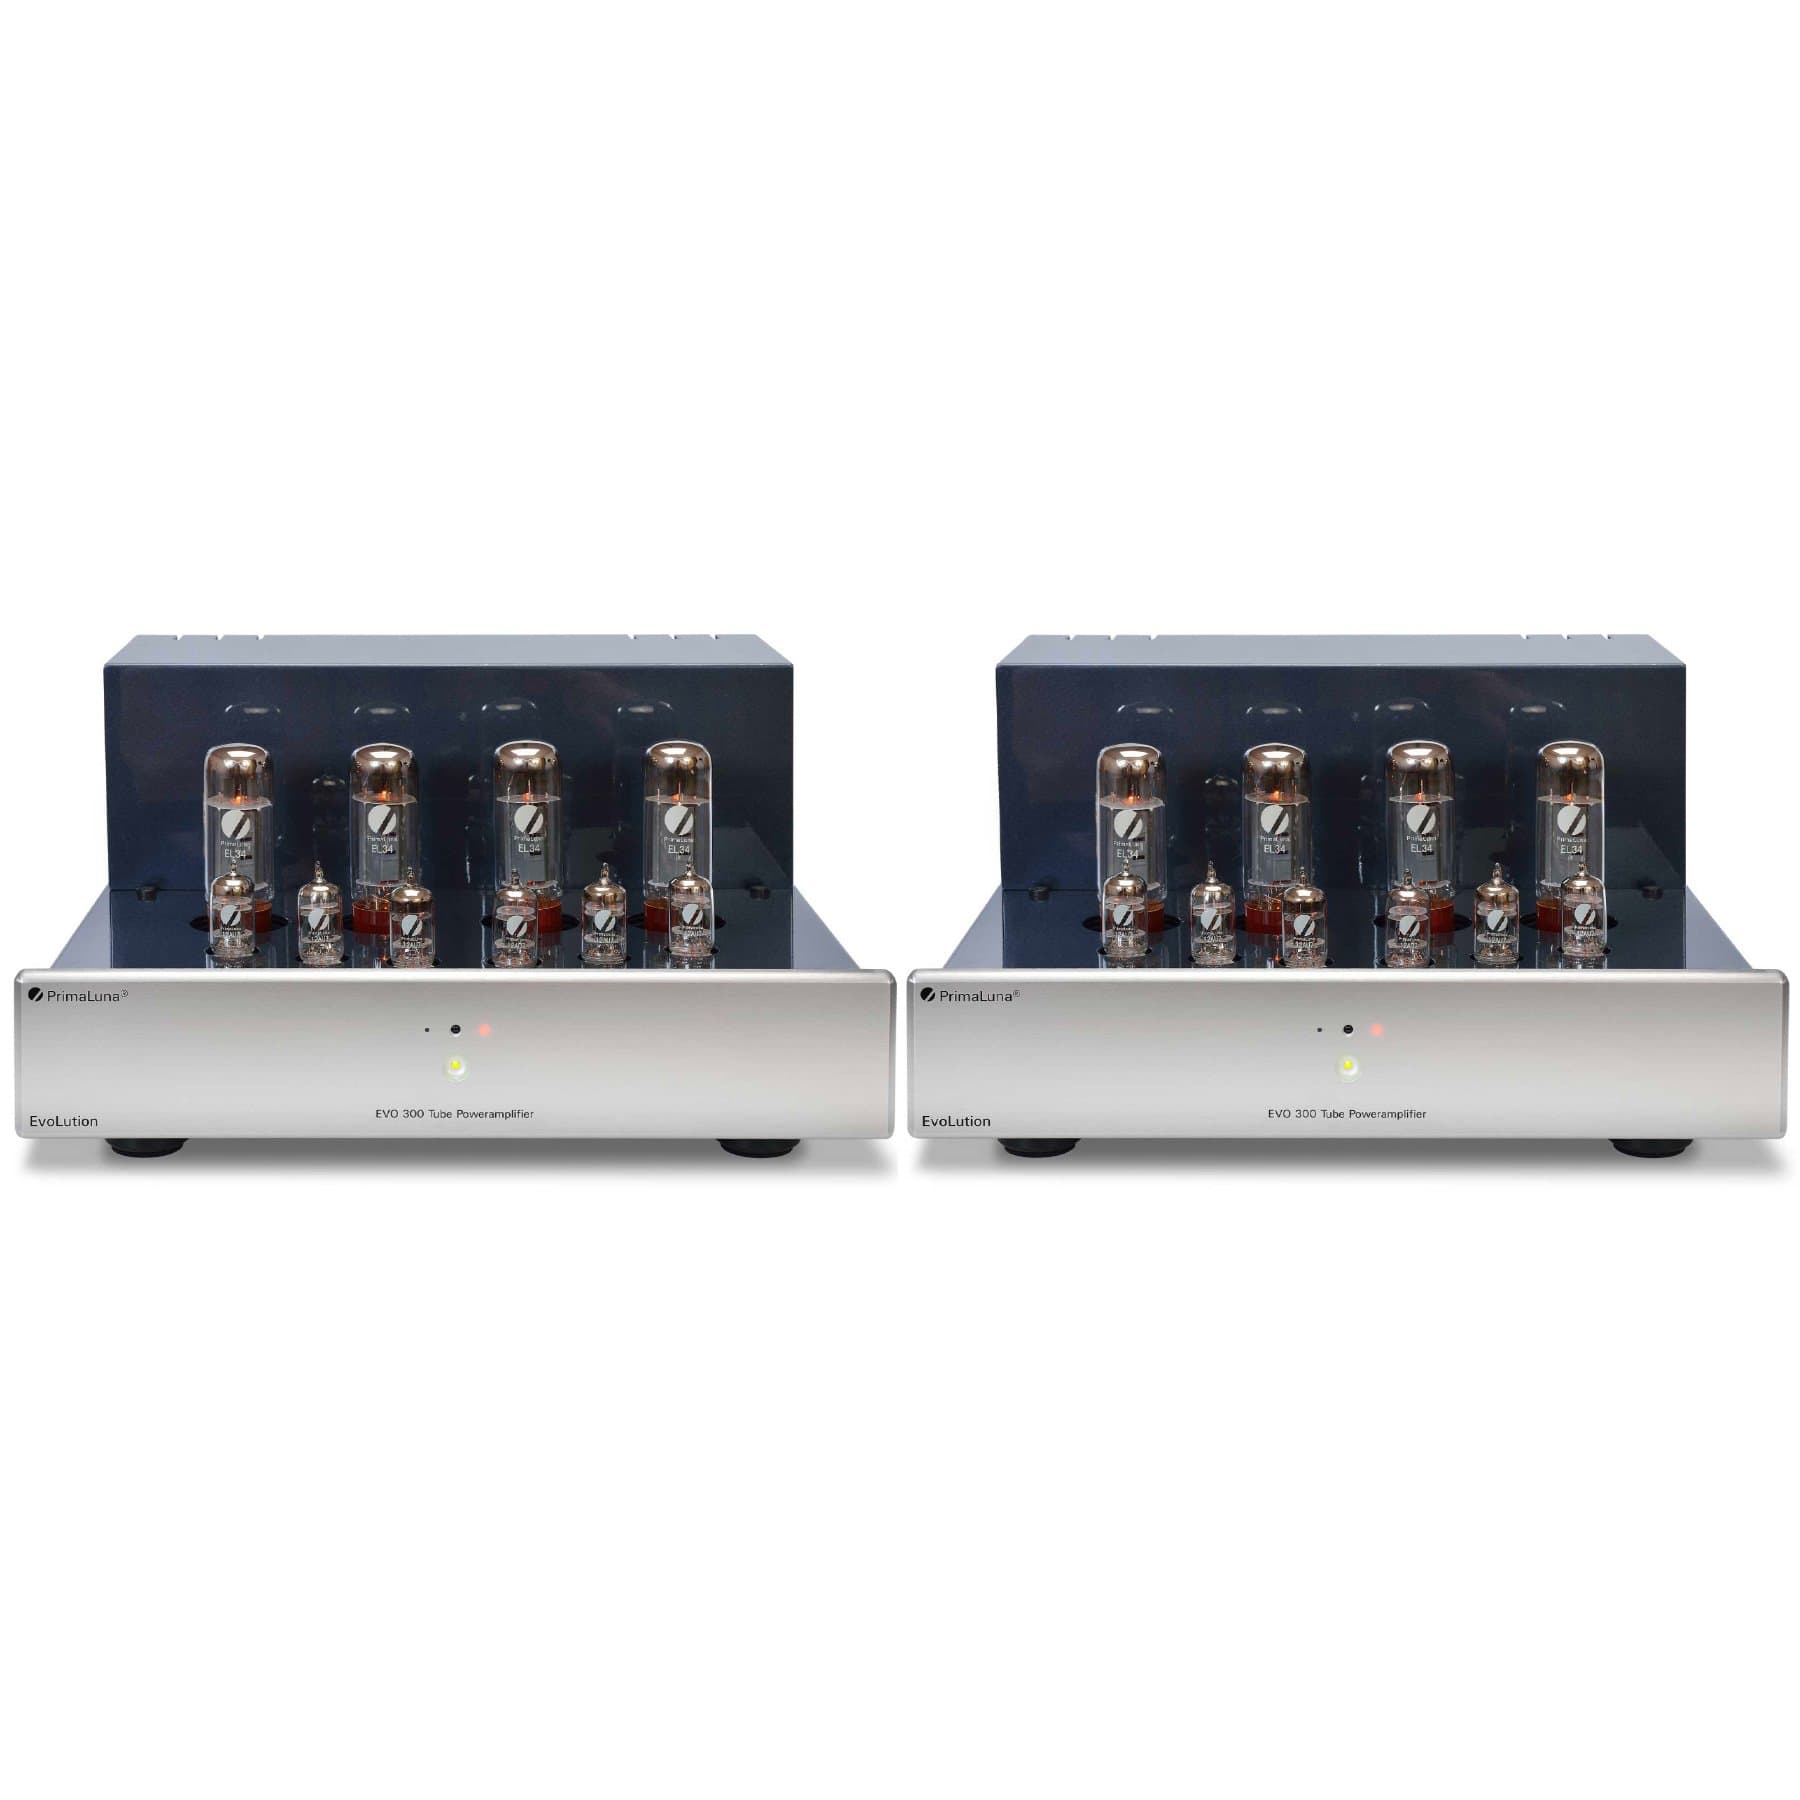 PrimaLuna EVO 300 Power Amplifier Monoblock (Pair)